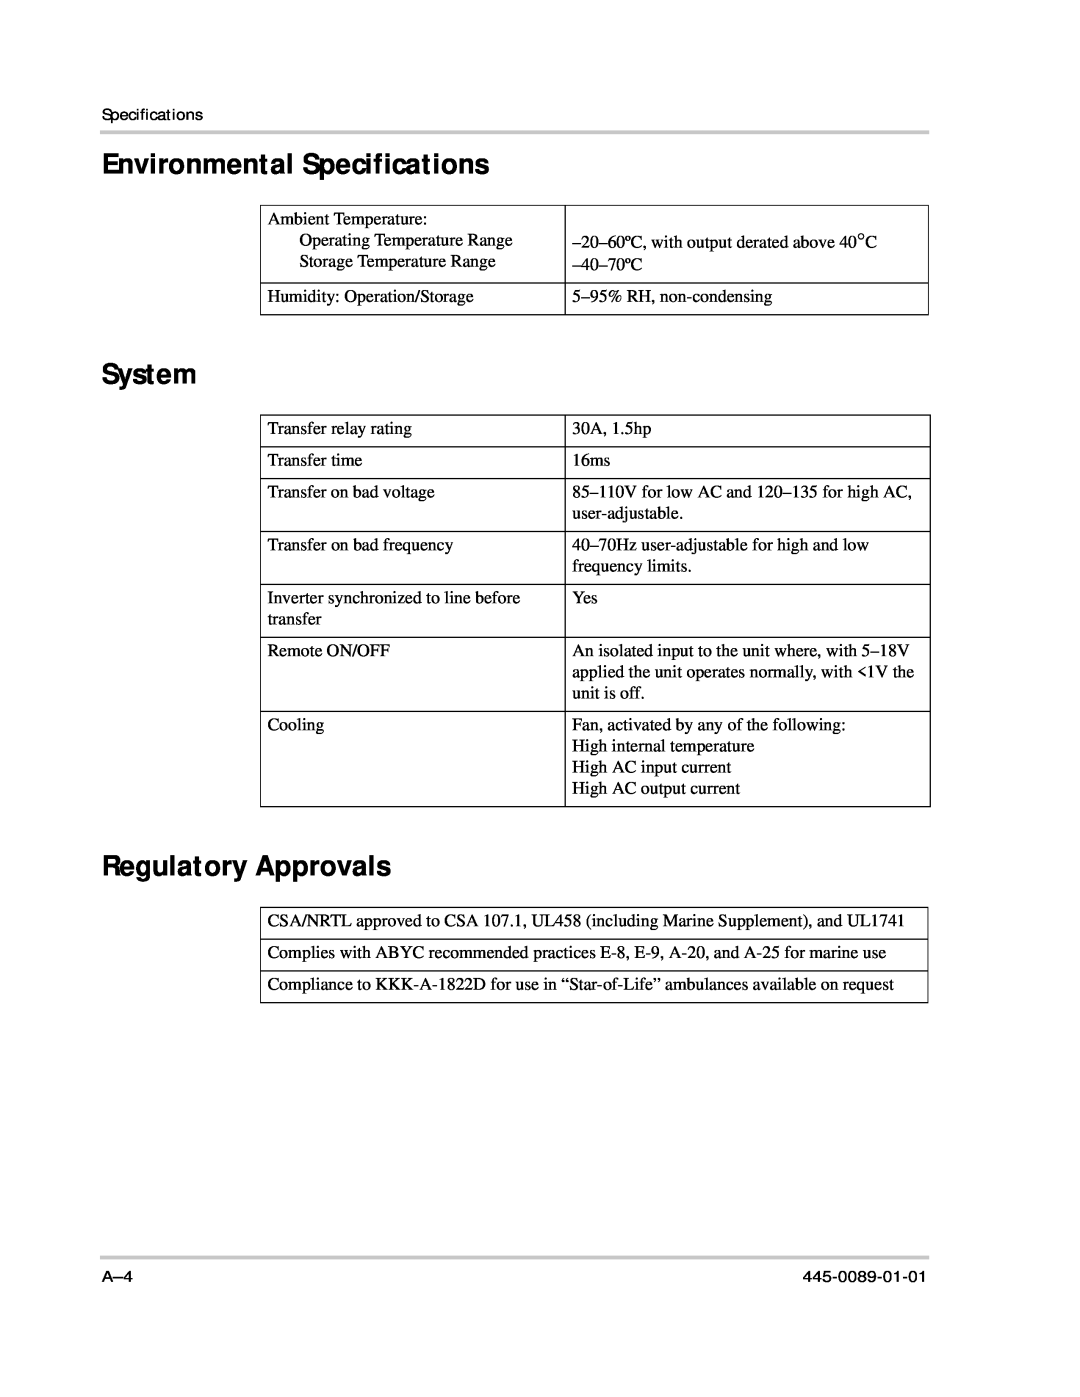 Xantrex Technology PROsine 2.0 user manual Environmental Specifications, System, Regulatory Approvals 